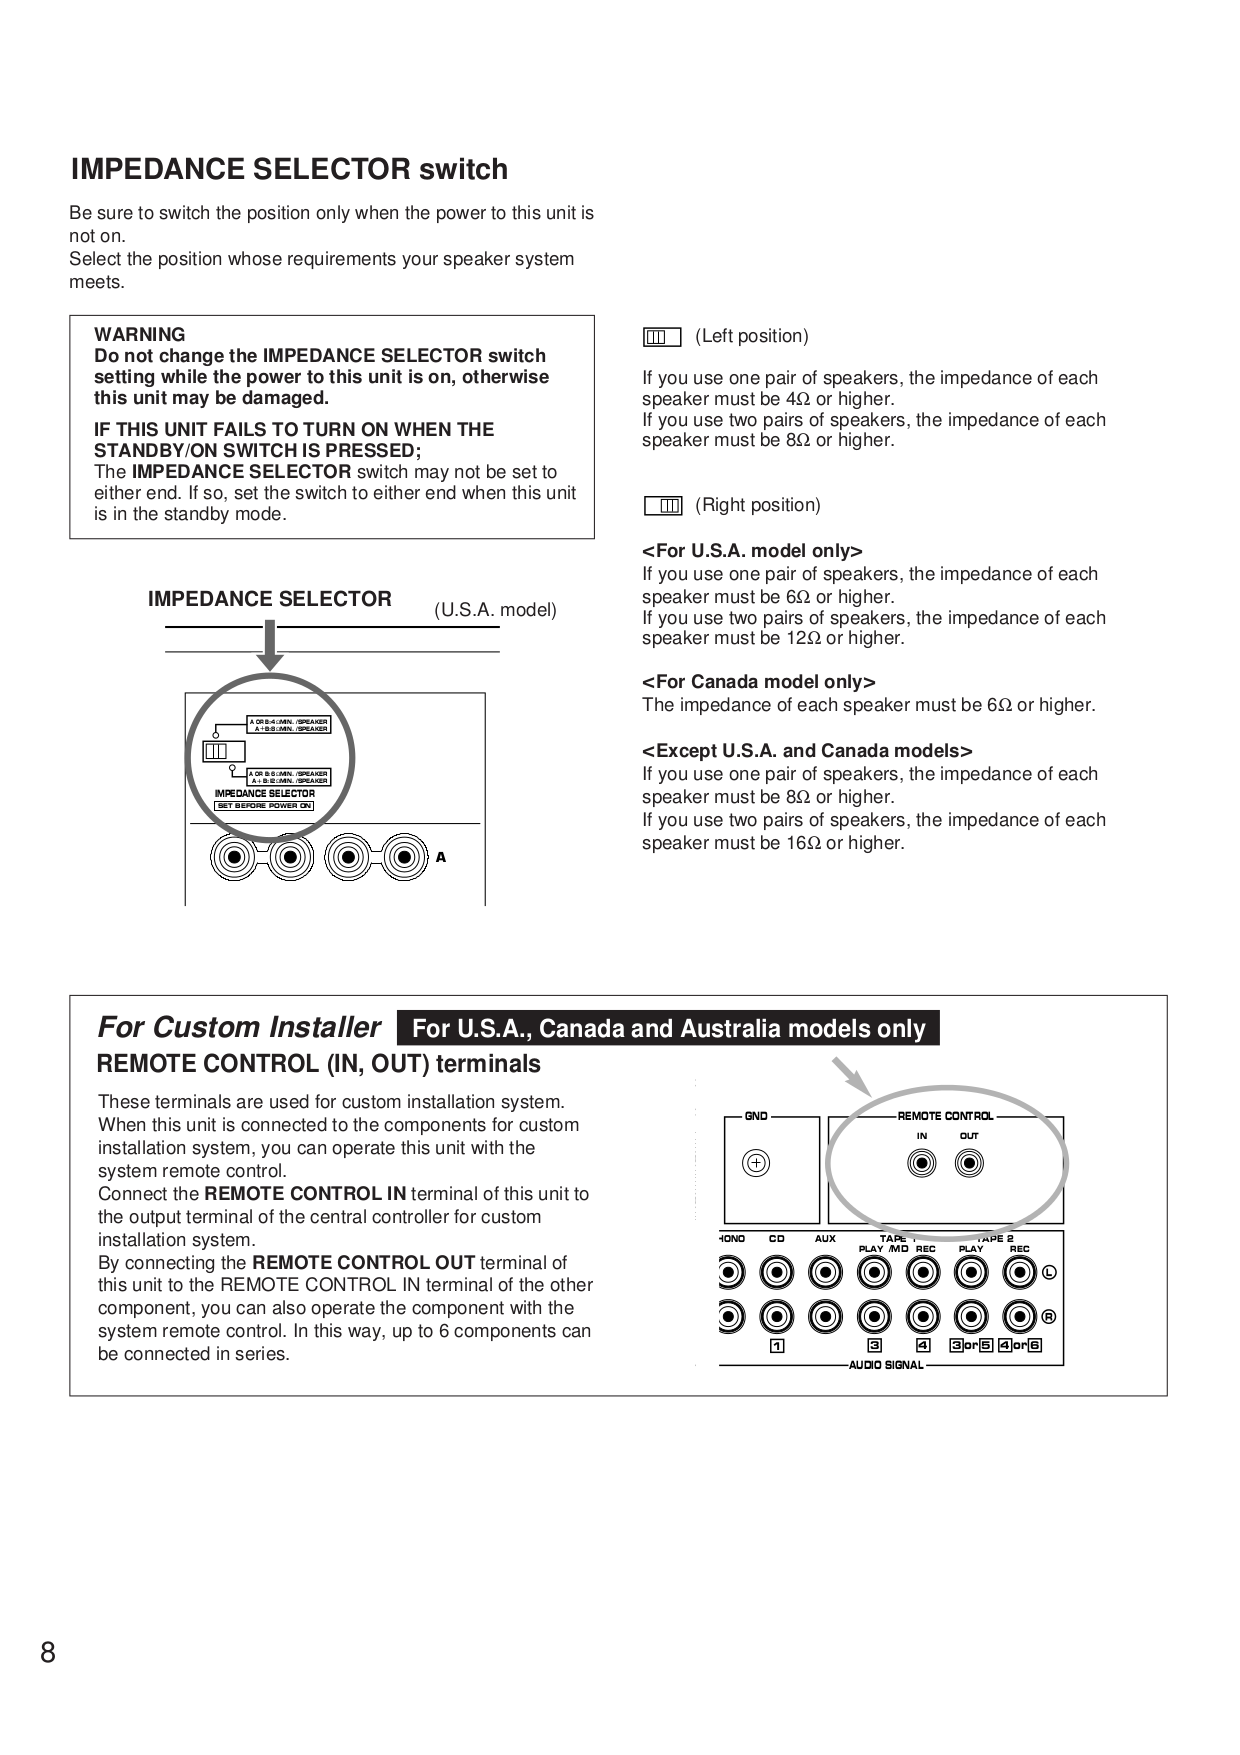 PDF manual for Yamaha Receiver RX-496